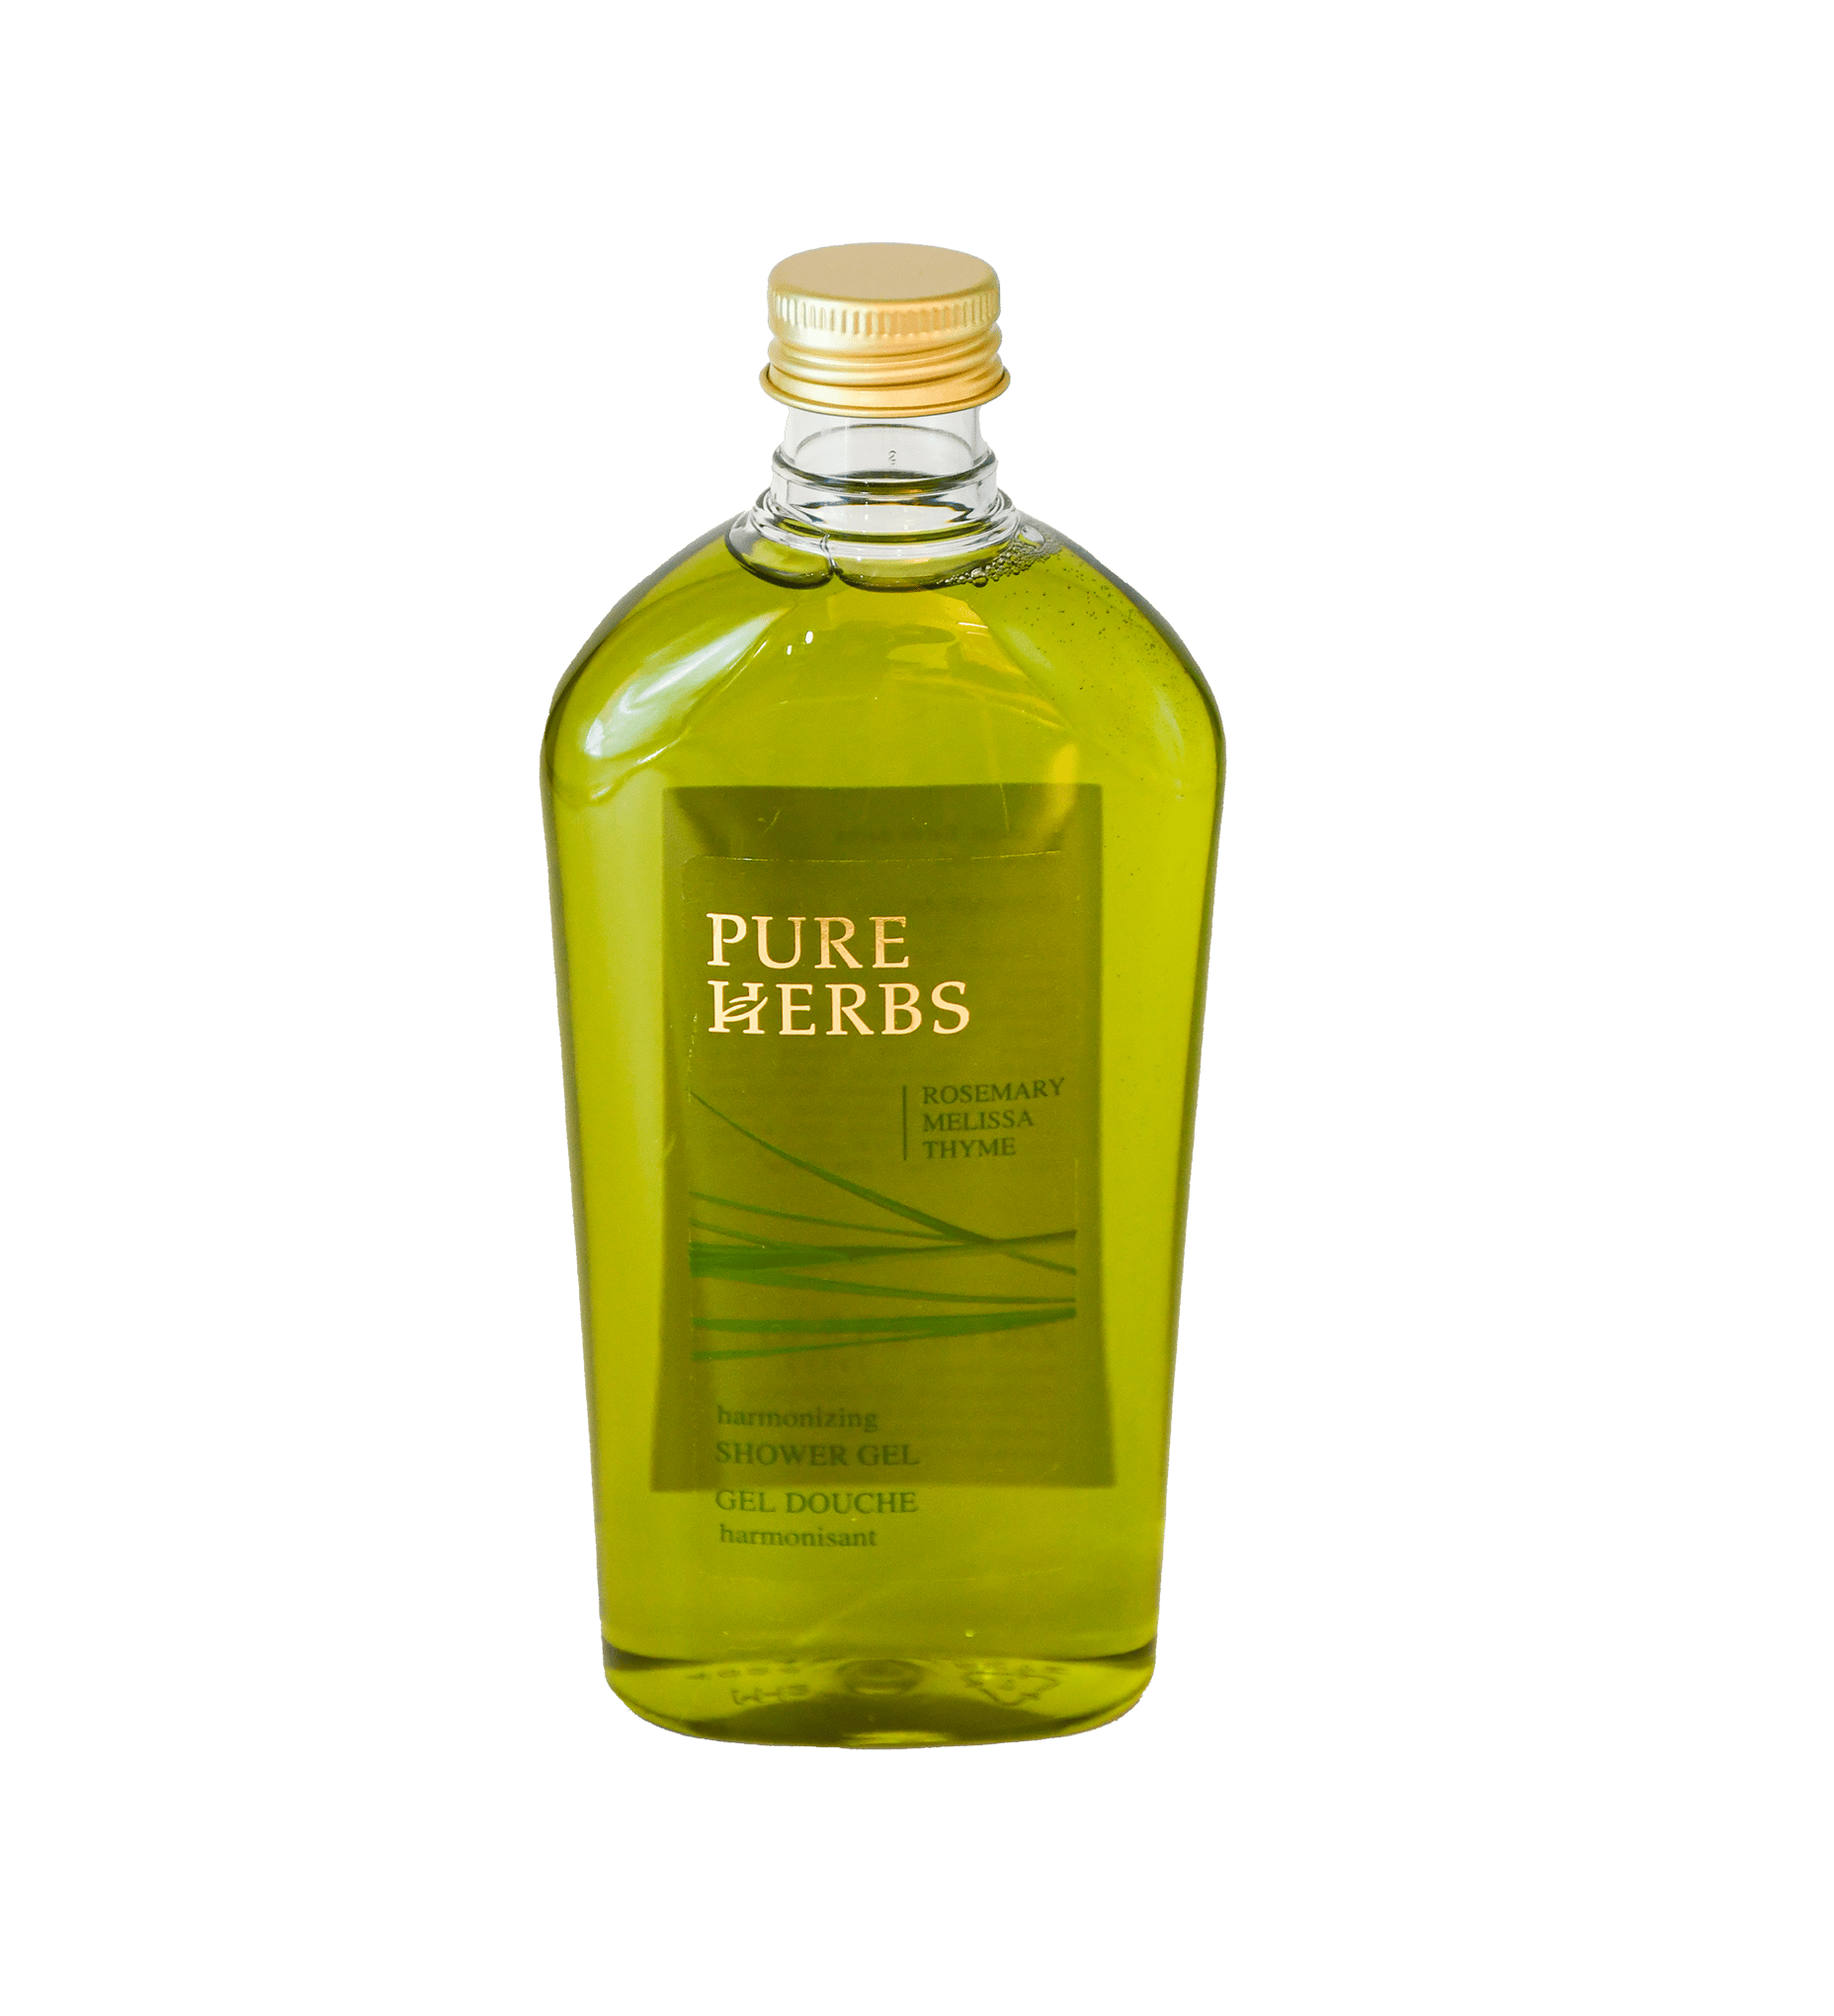 Pure Herbs - Shower gel